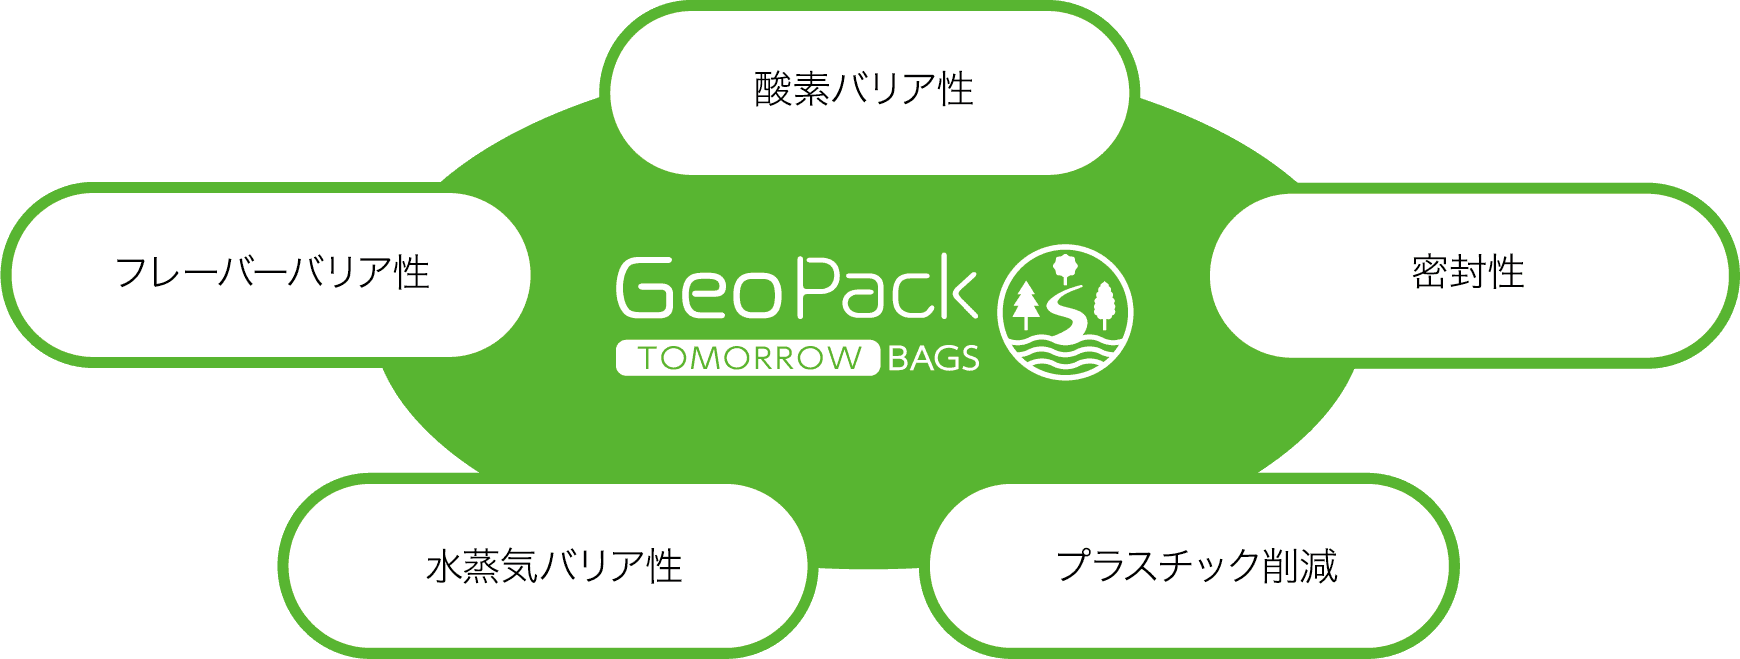 GeoPackTOMORROW BAGS 酸素バリア性 フレーバーバリア性 水蒸気バリア性 プラスチック削減 密封性